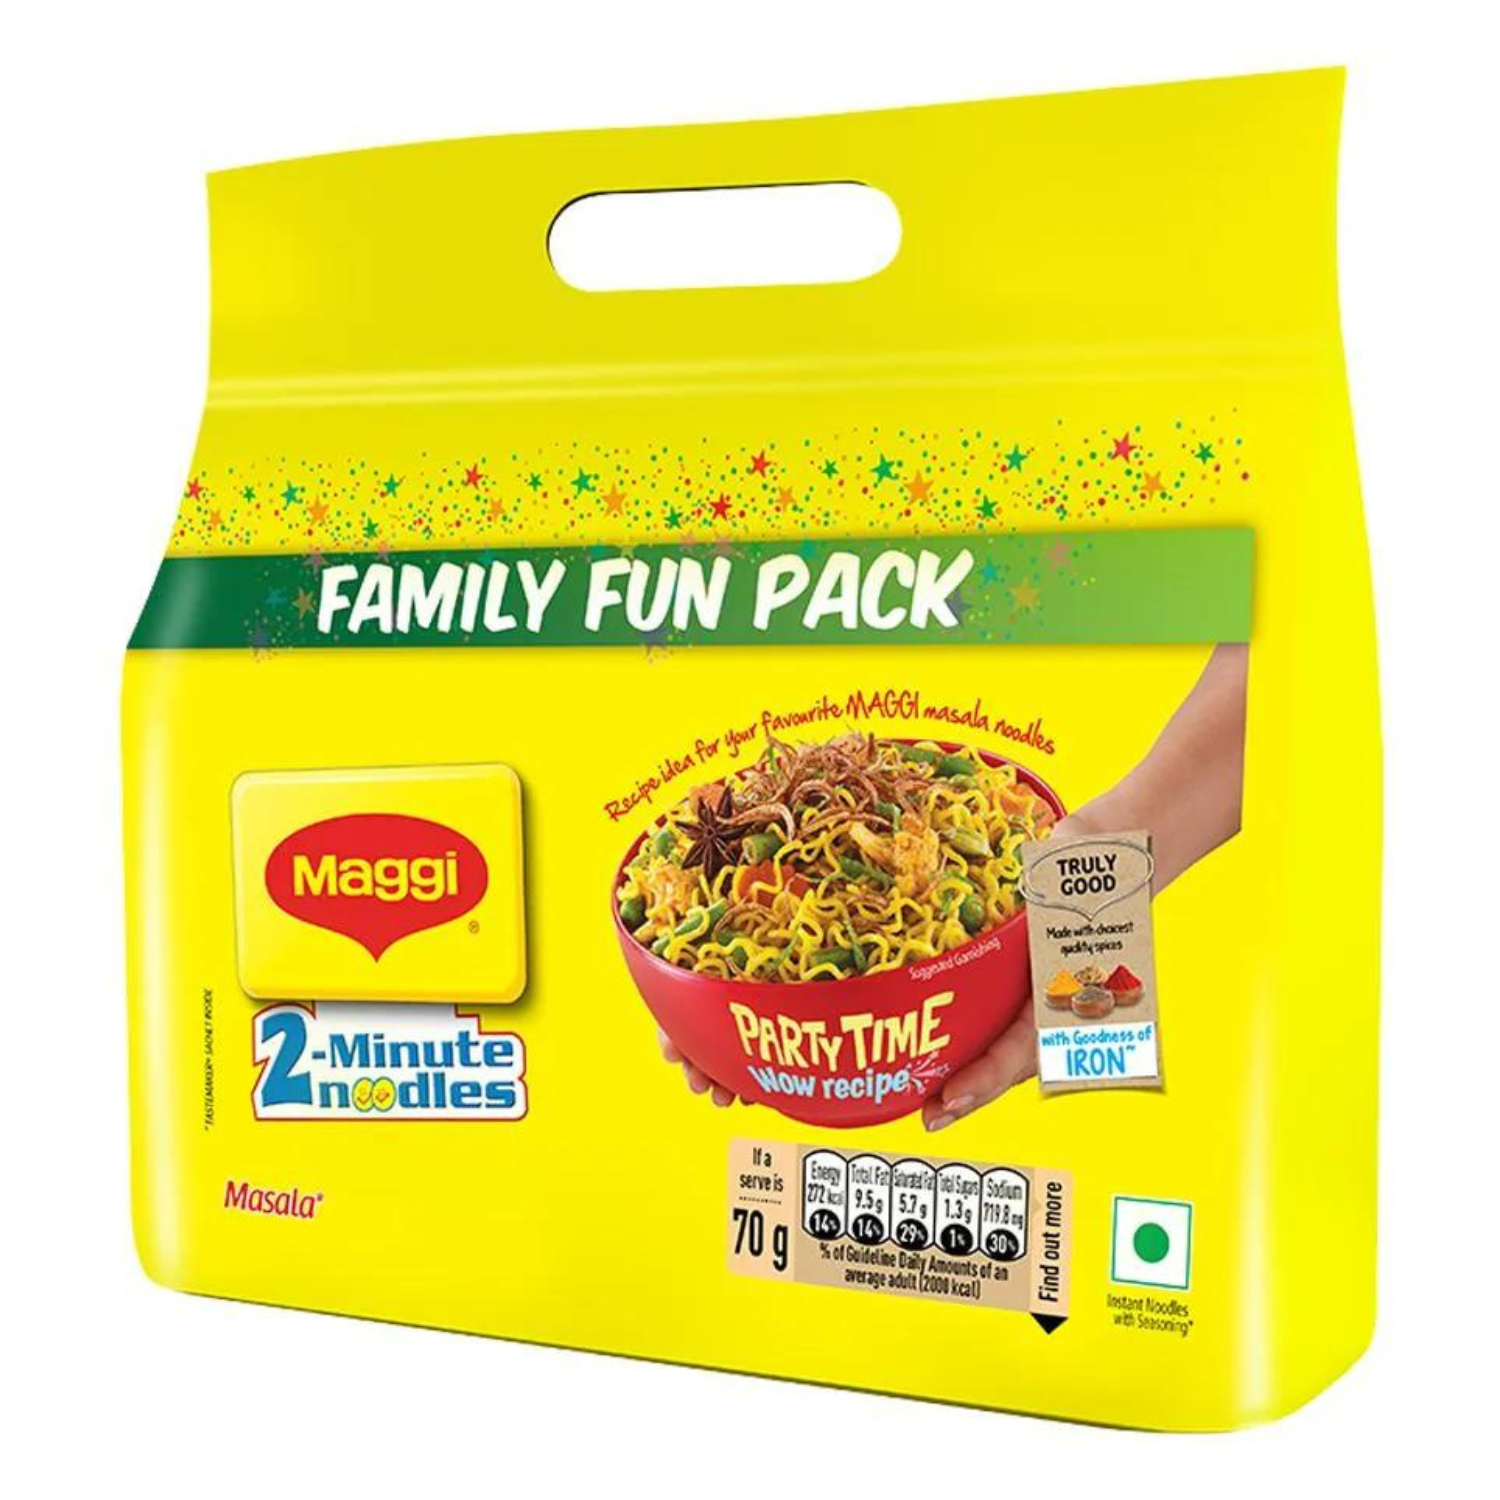 Buy MAGGI Noodles - Masala Online at Best Price of Rs 56 - bigbasket